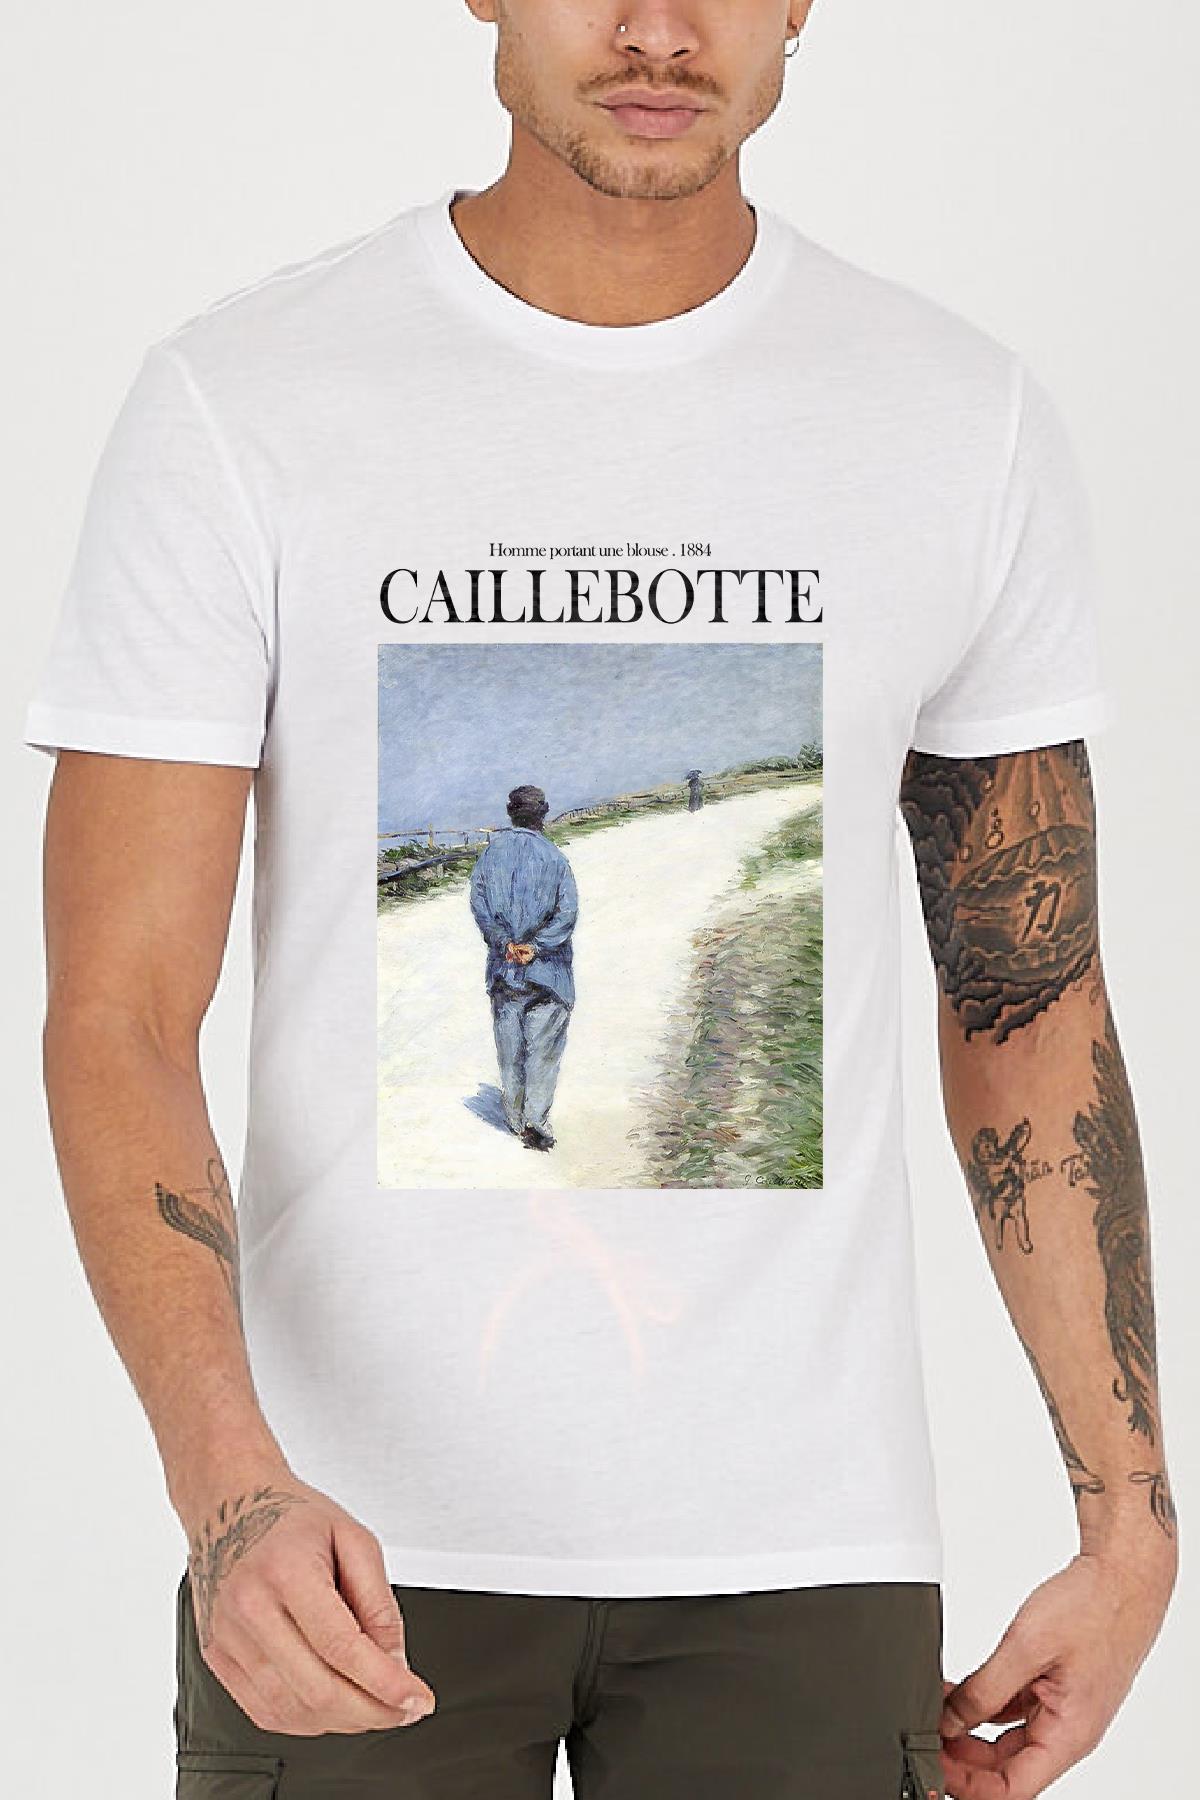 Photo Print Printed Crew Neck Casual Regeler Mold Men's T -shirt